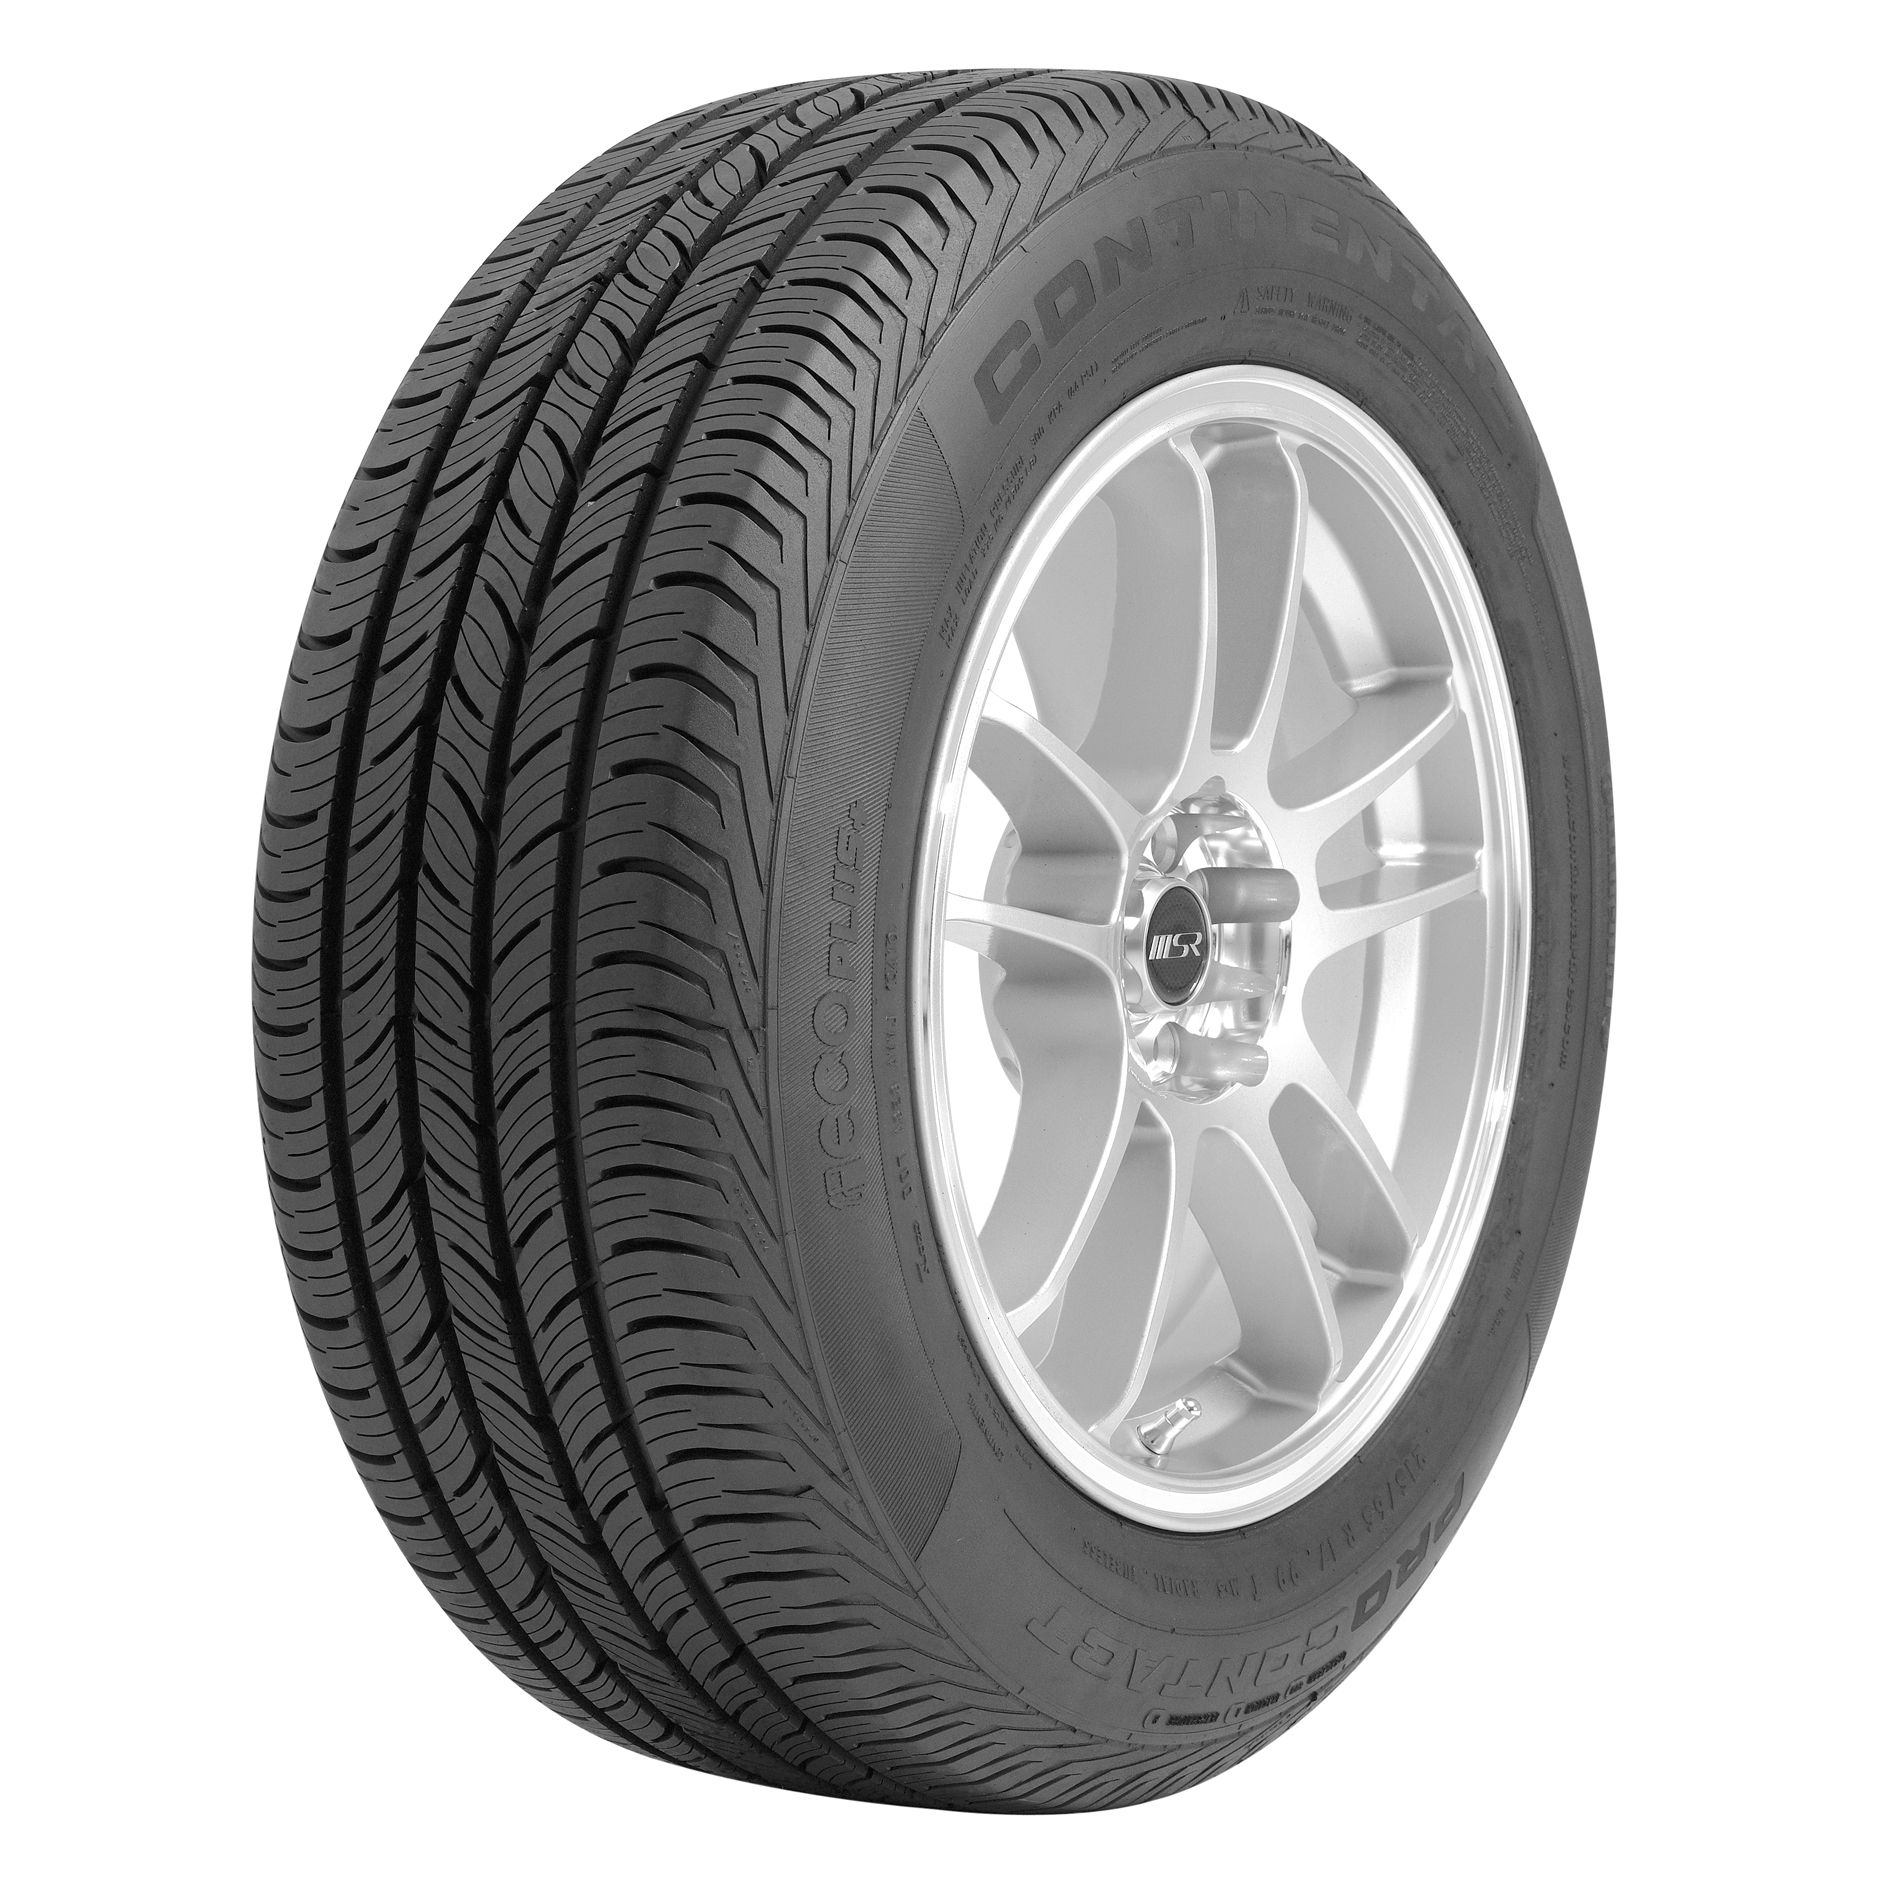 Continental Pro Contact Eco Plus - 215/60R17 96T BW - All-Season Tire